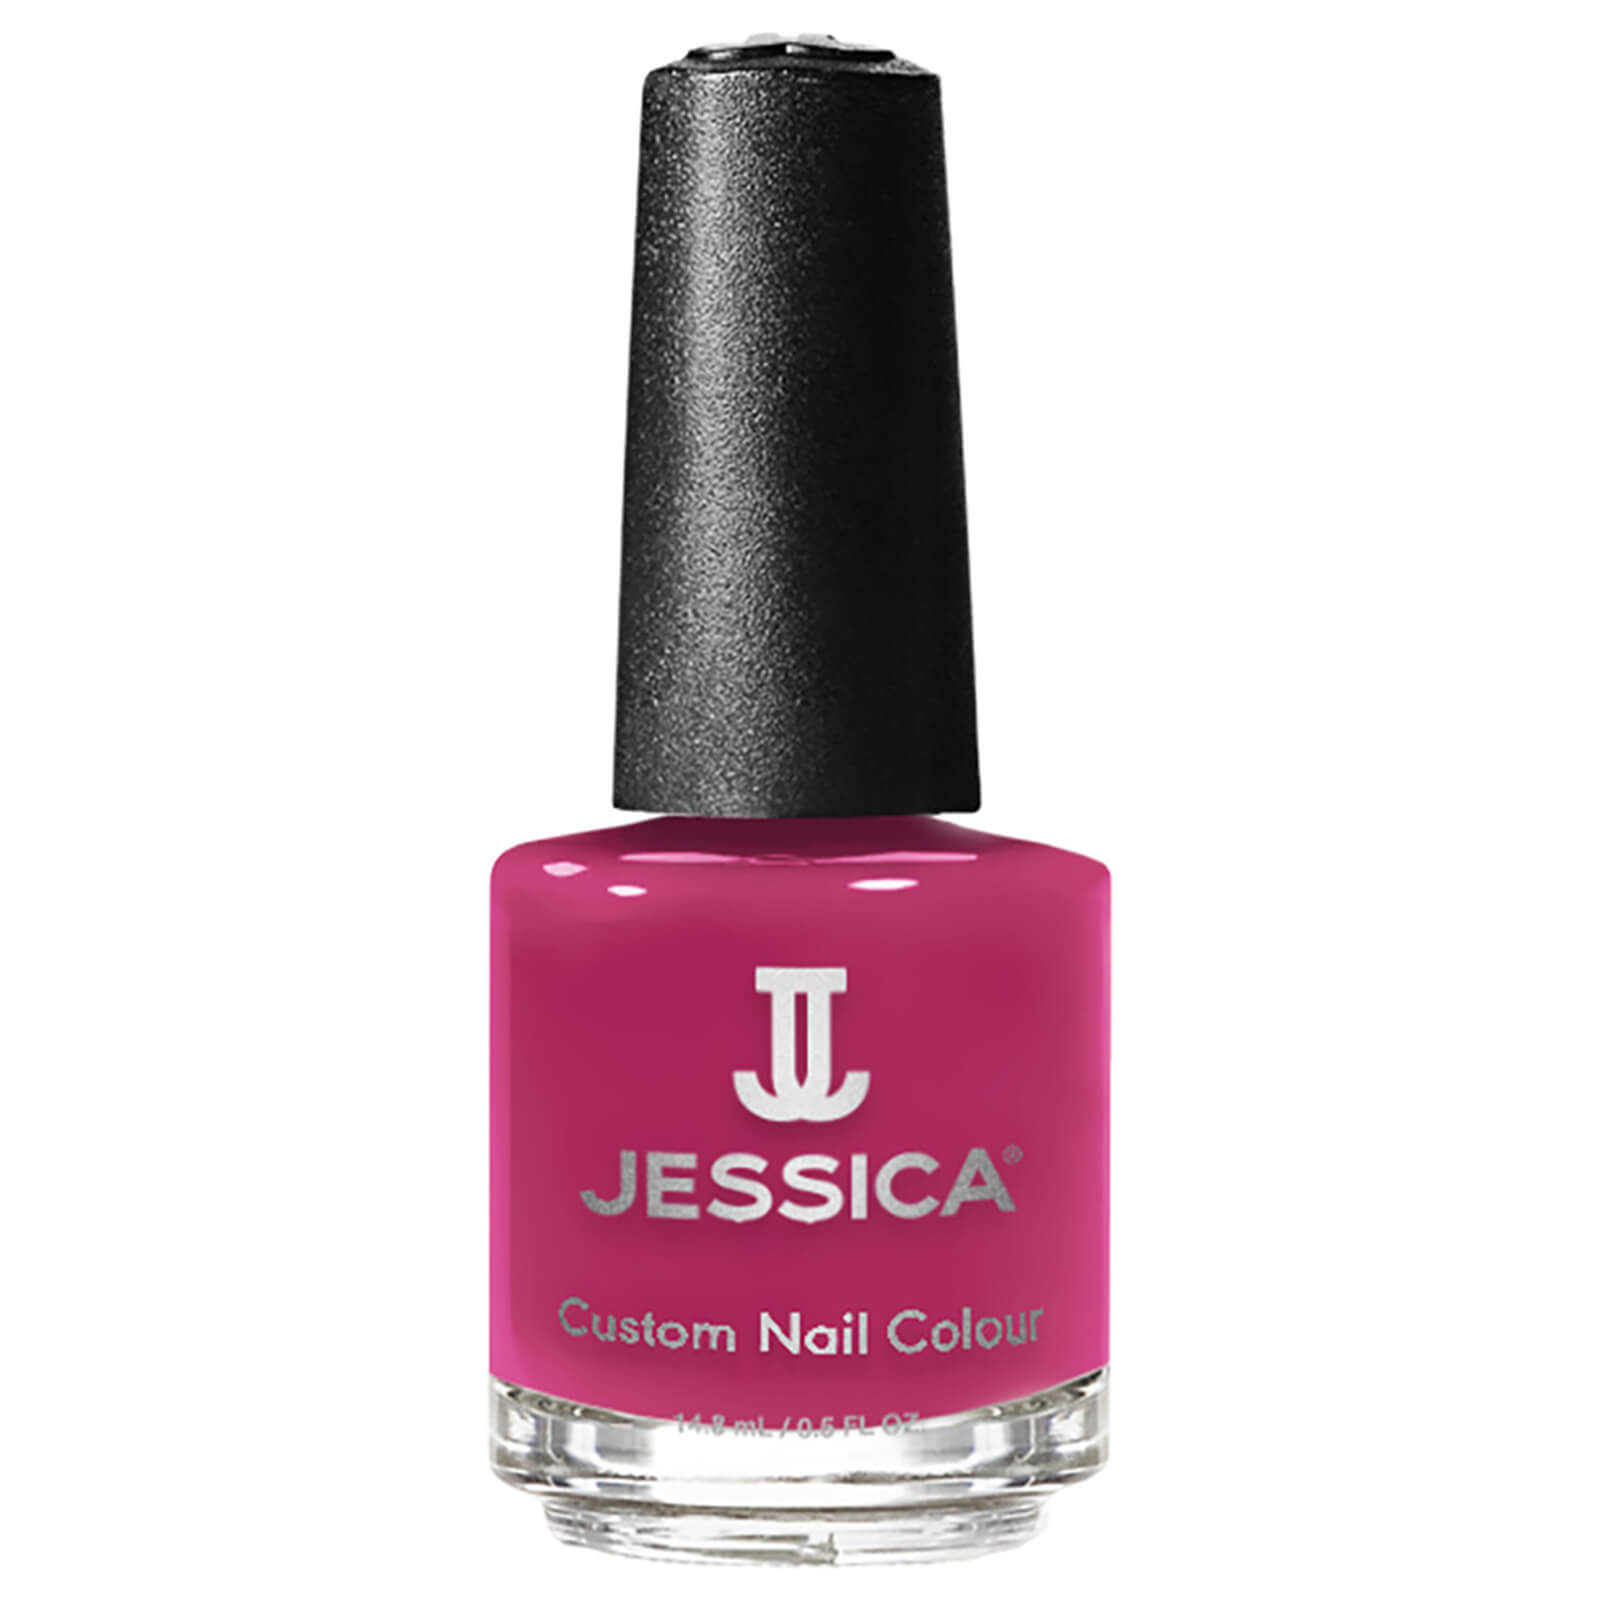 Image of Jessica Nails Custom Colour Festival Fuchsia Nail Varnish 15ml